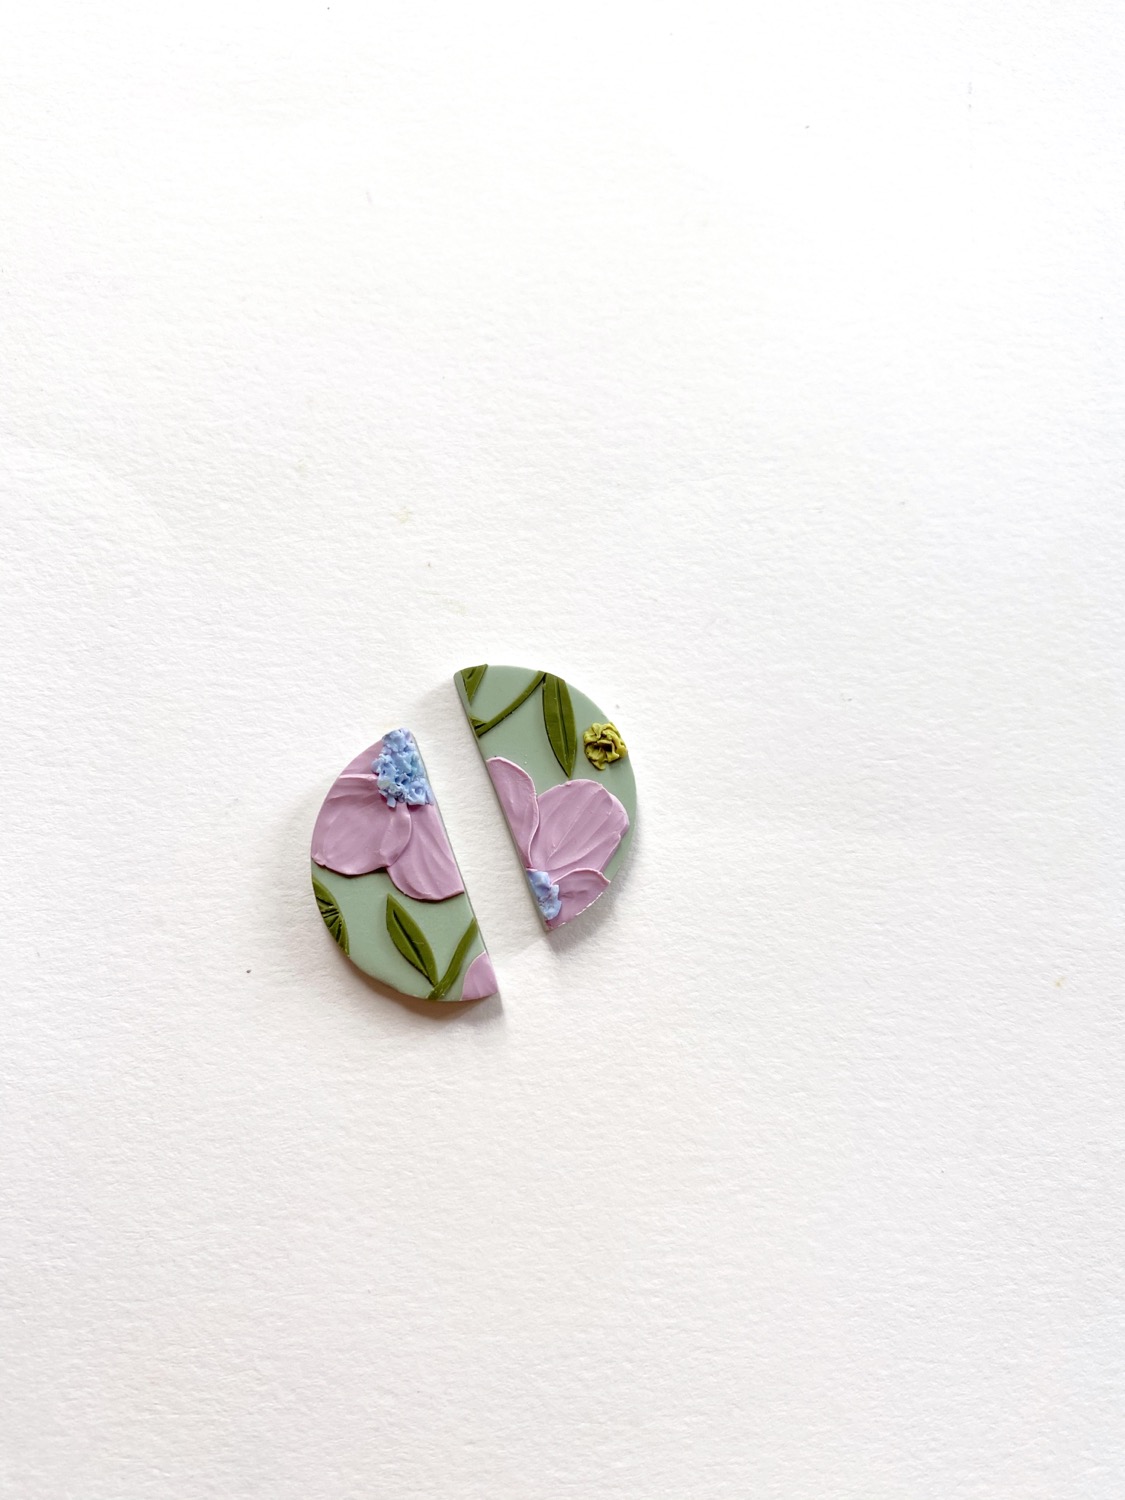 Lavender Poppies - Mini Half Moon Studs, Polymer Clay Earrings